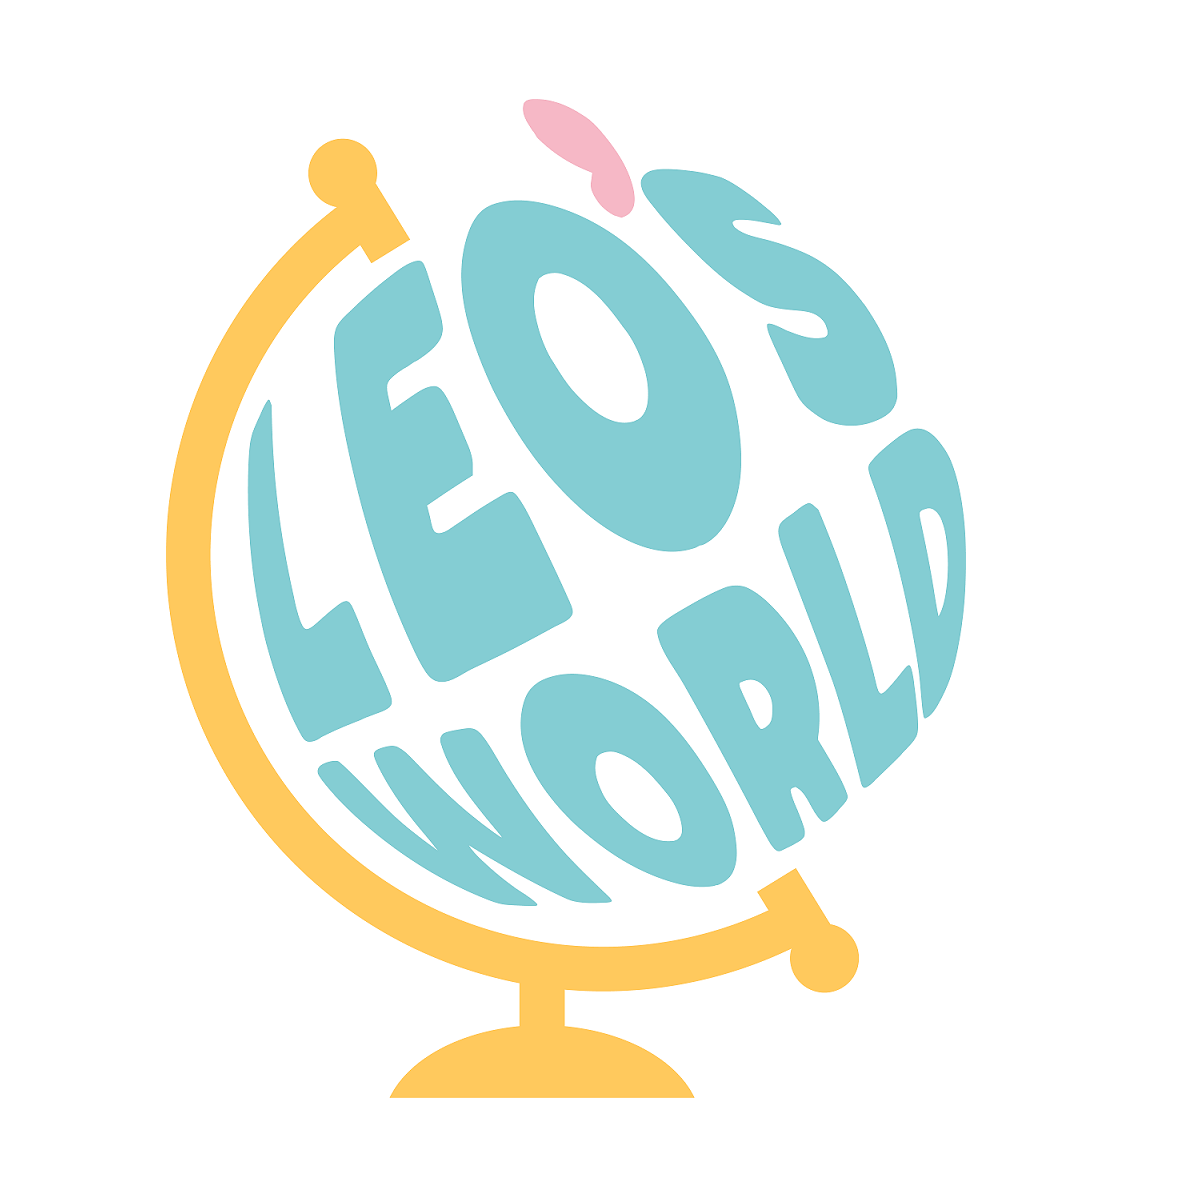 Leo's World